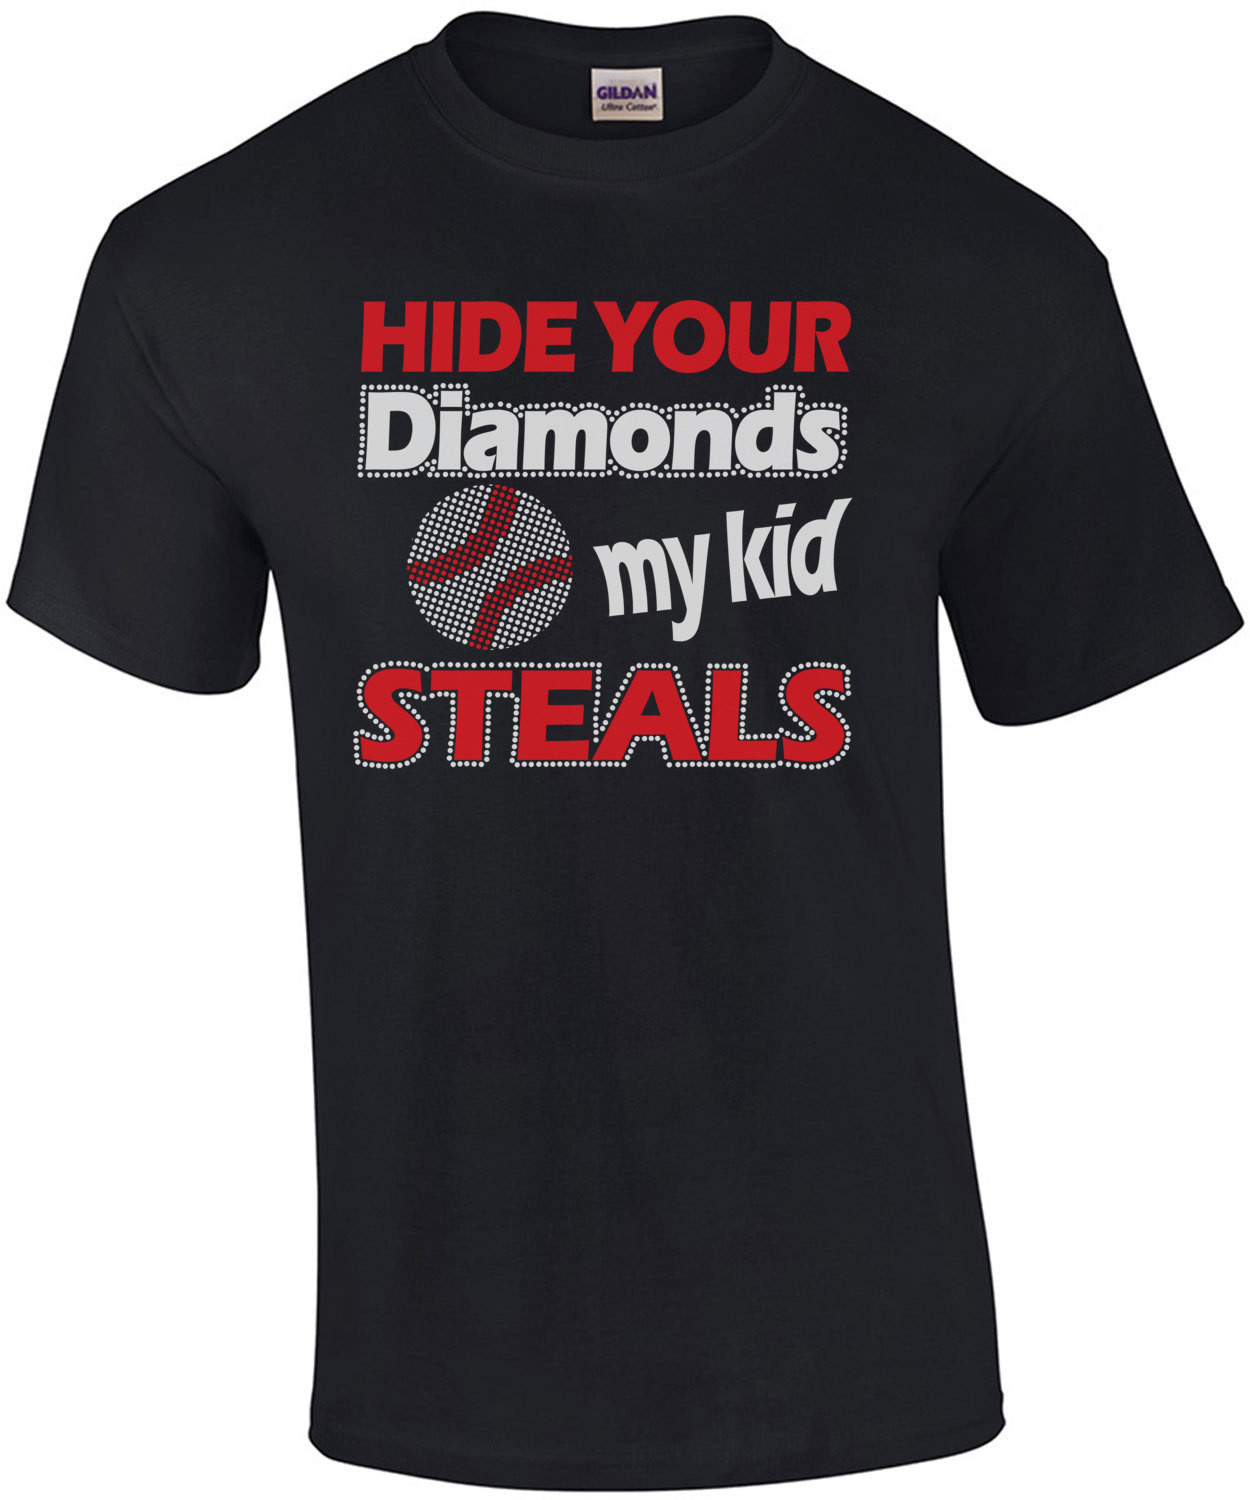 Hide Your Diamonds My Kid Steals T-Shirt